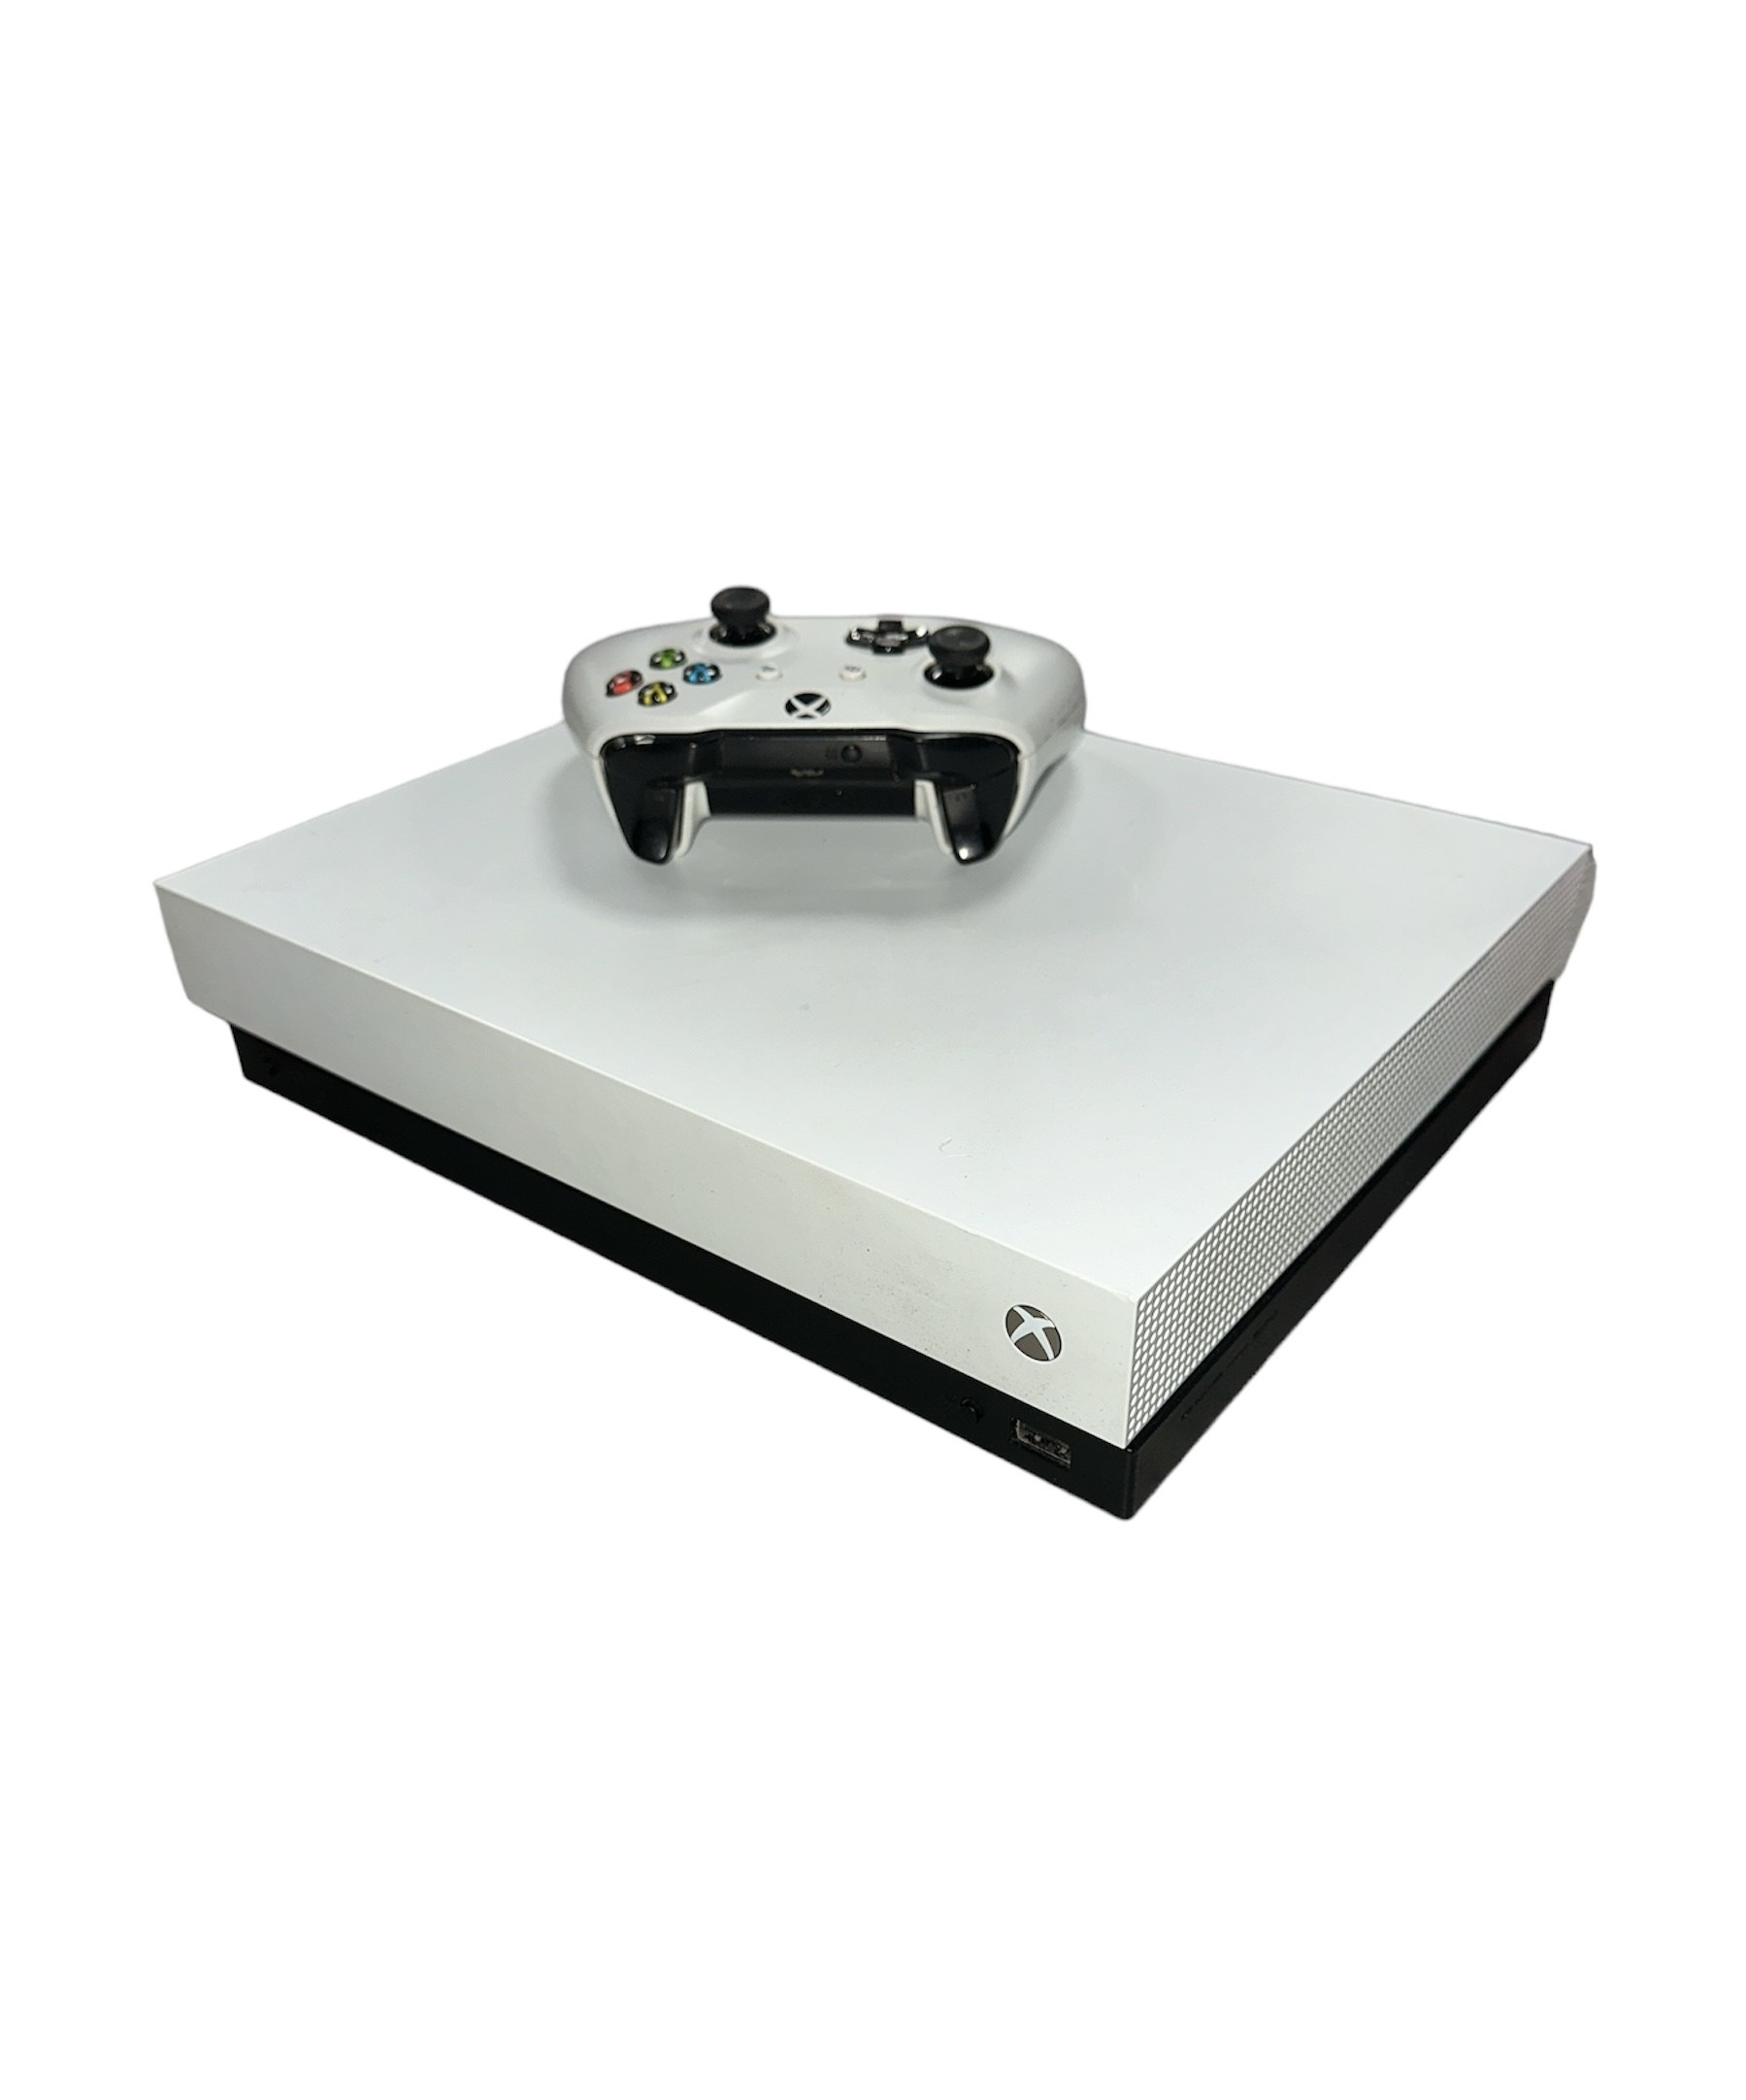 Microsoft - Xbox One X - White - 1TB - 1 Controller